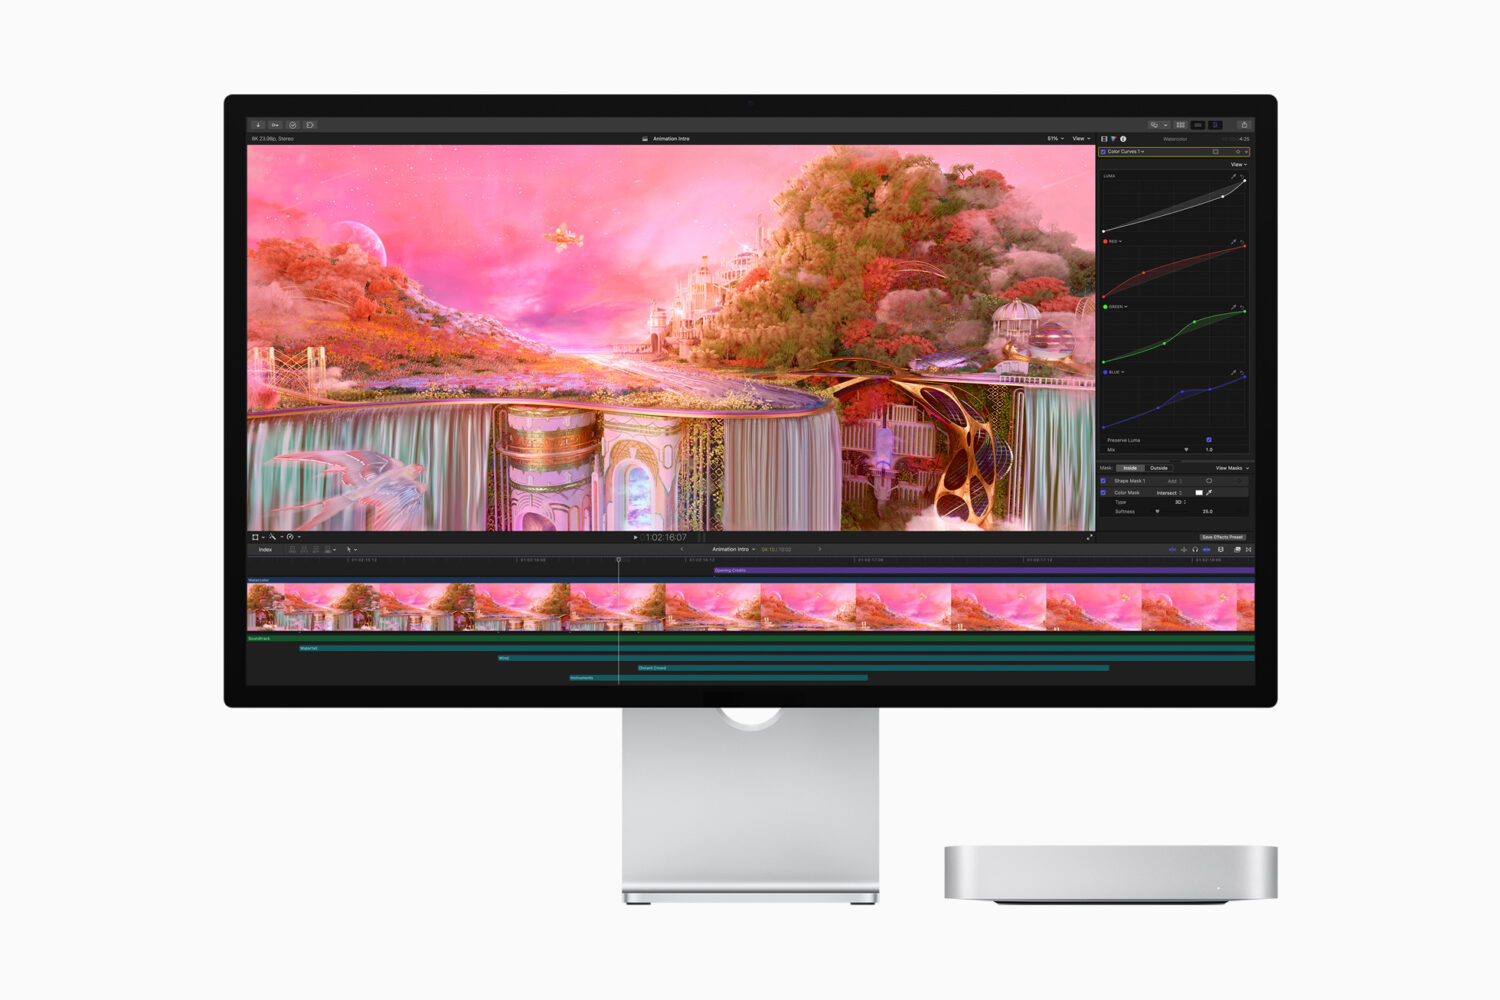 Marketing image showing Apple Studio Display and Mac mini